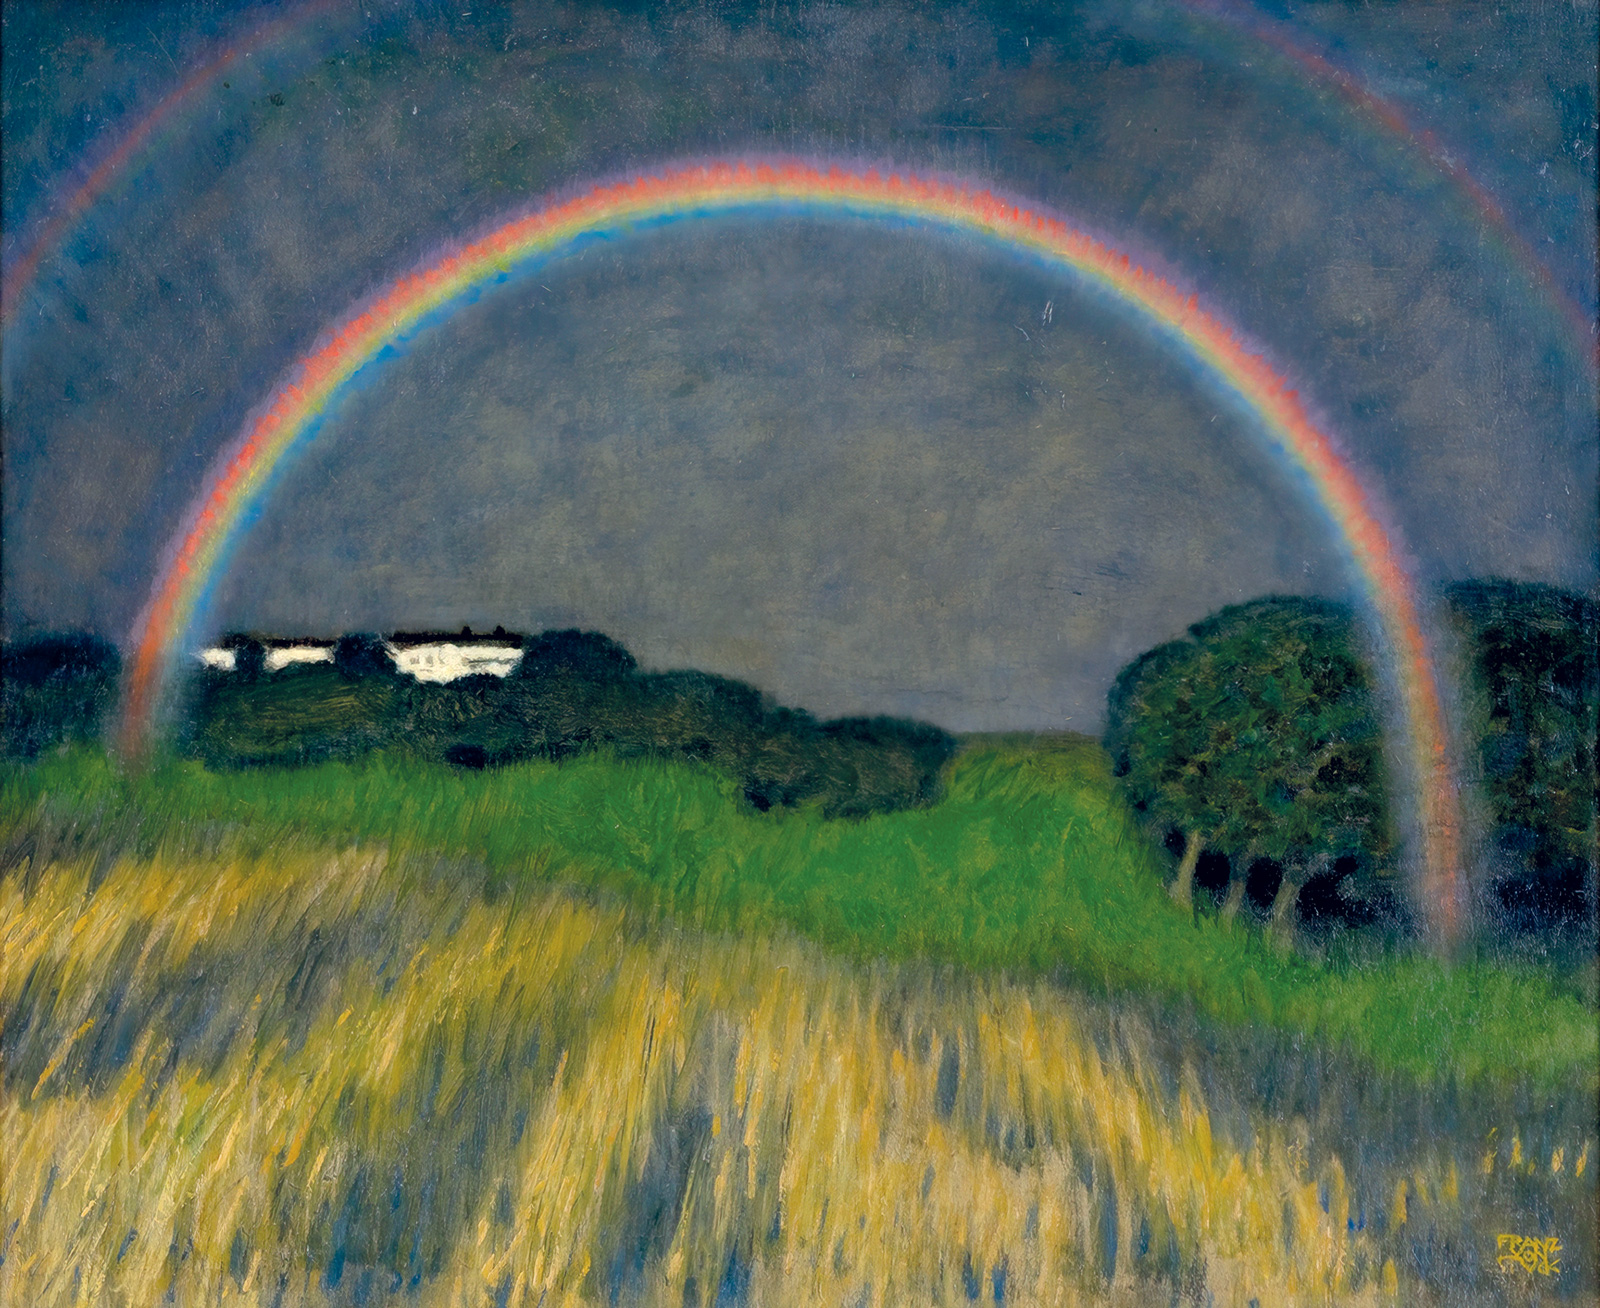 Franz von Stuck, *Paisaje del arcoiris,* 1927